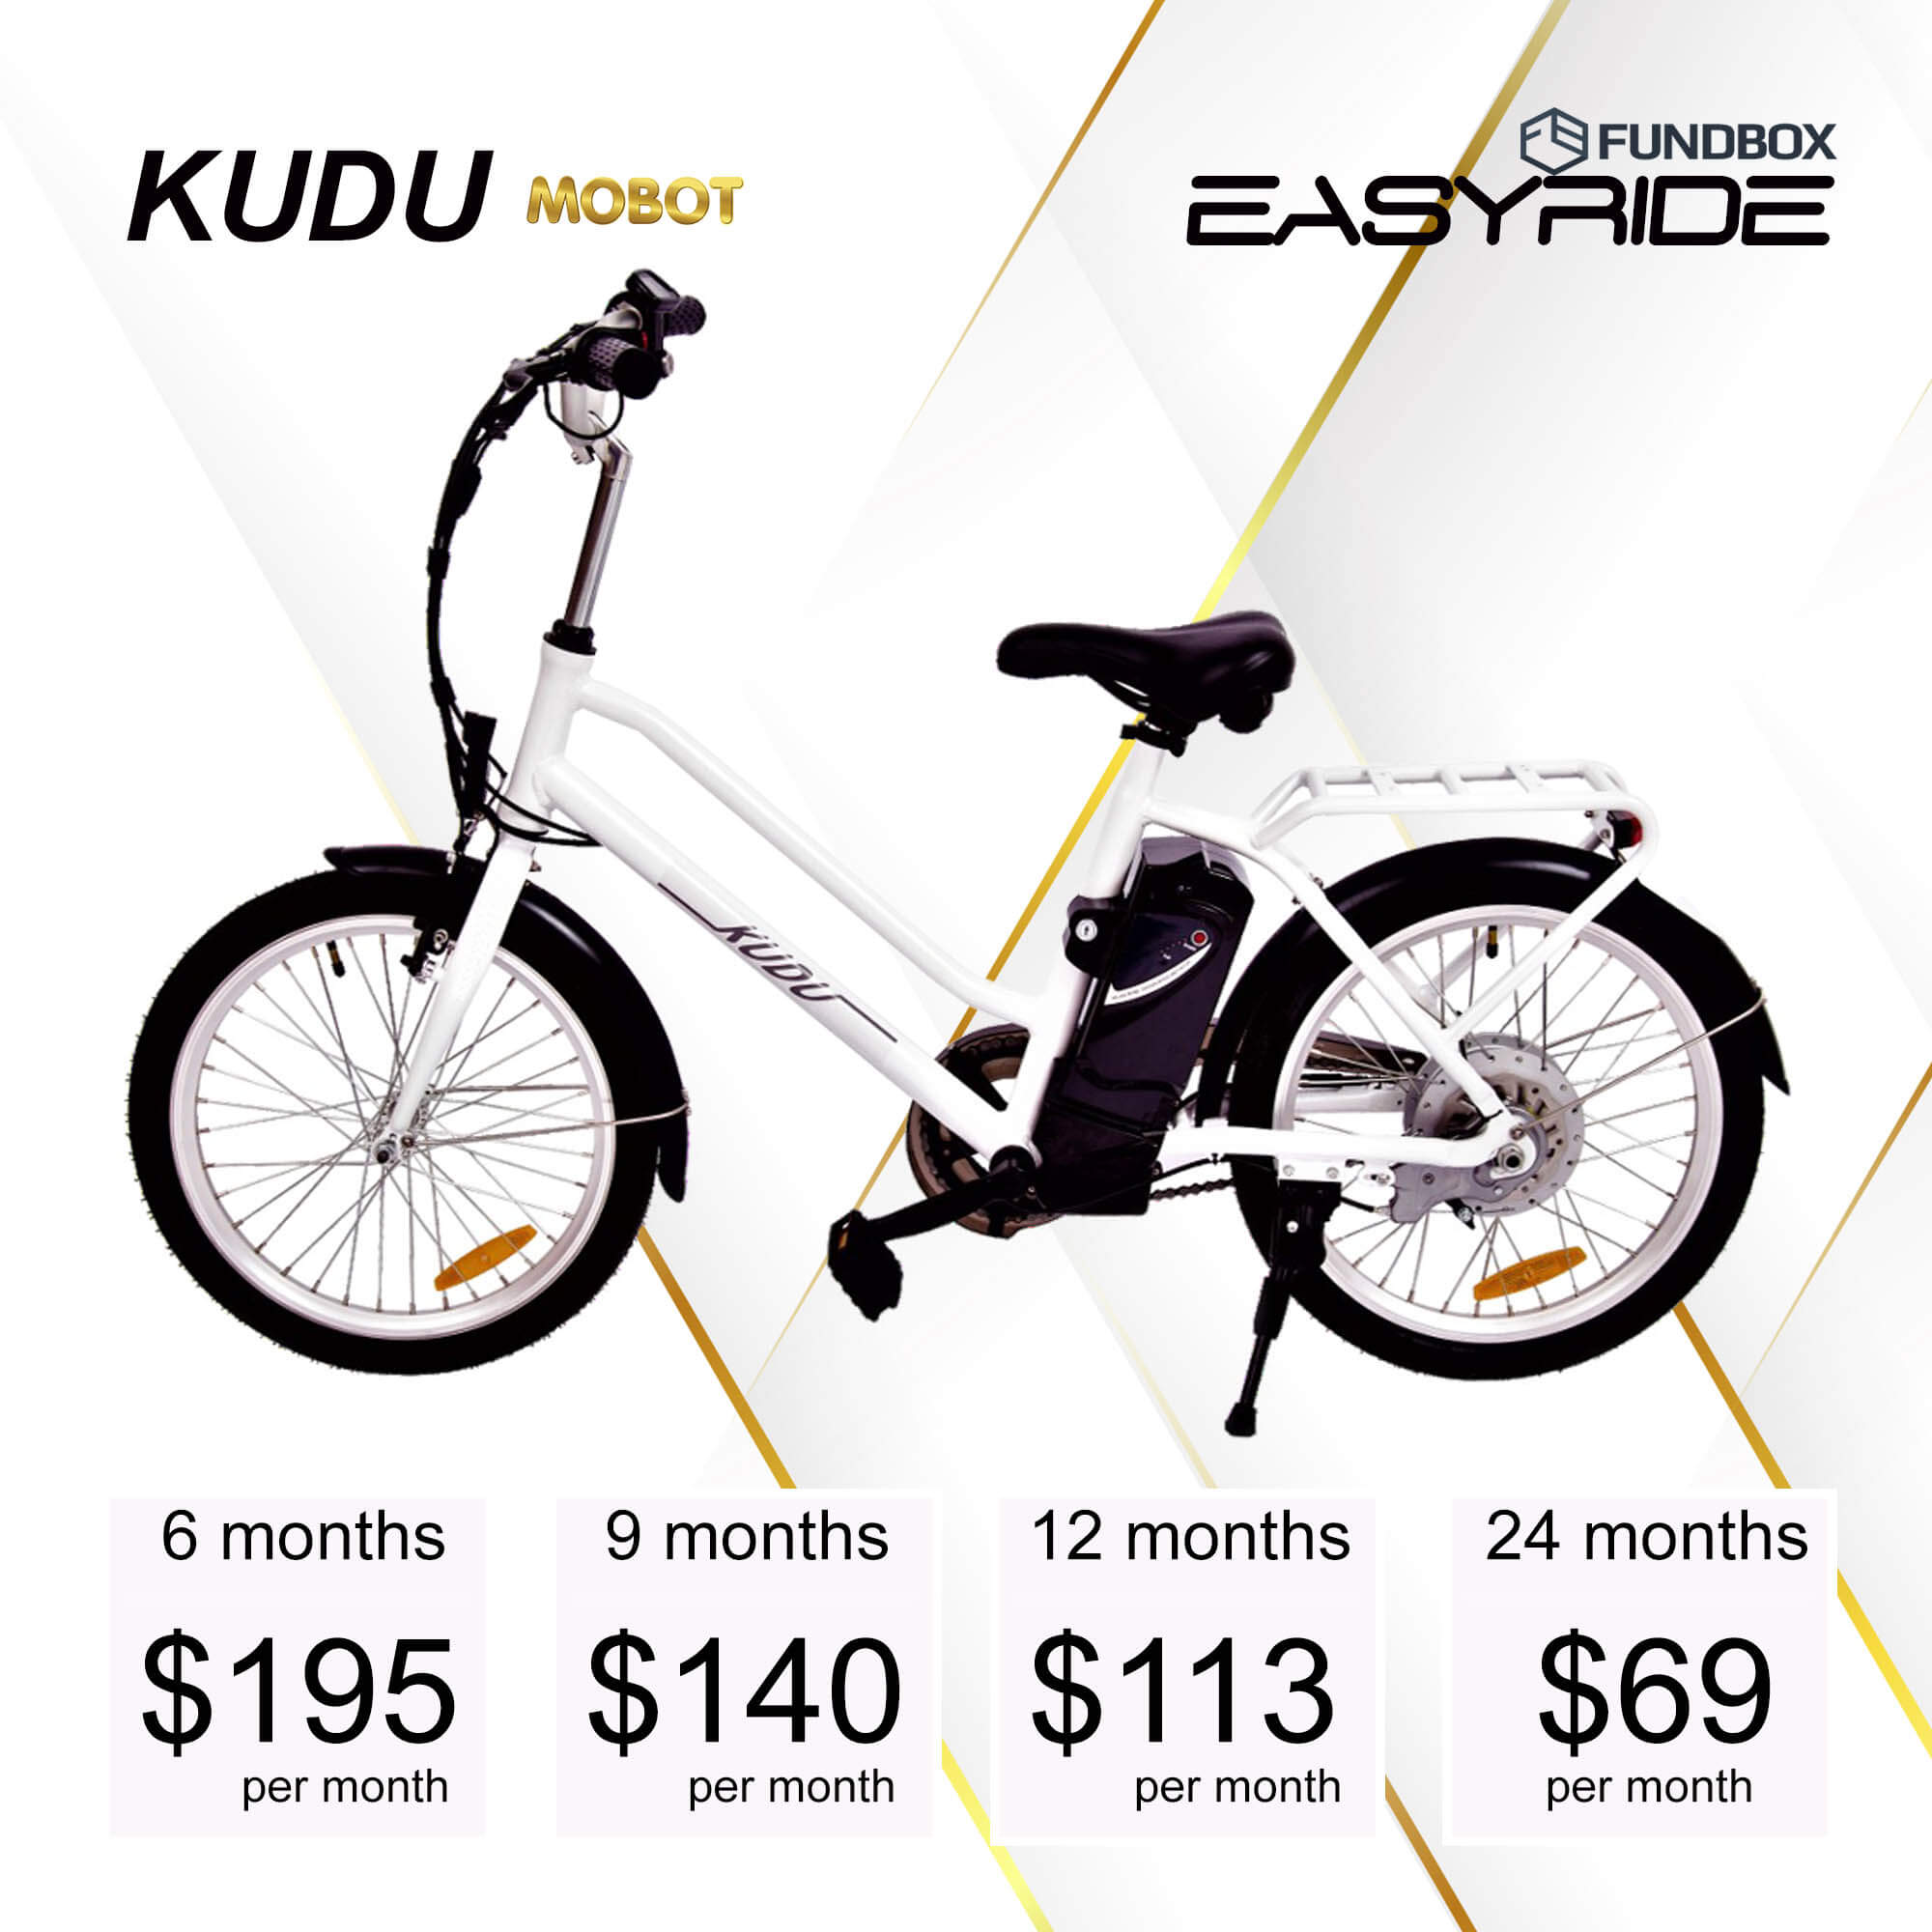 KUDU ebike monthly instalment plan - Affordable monthly instalment plan for ebike – MOBOT EASYRIDE